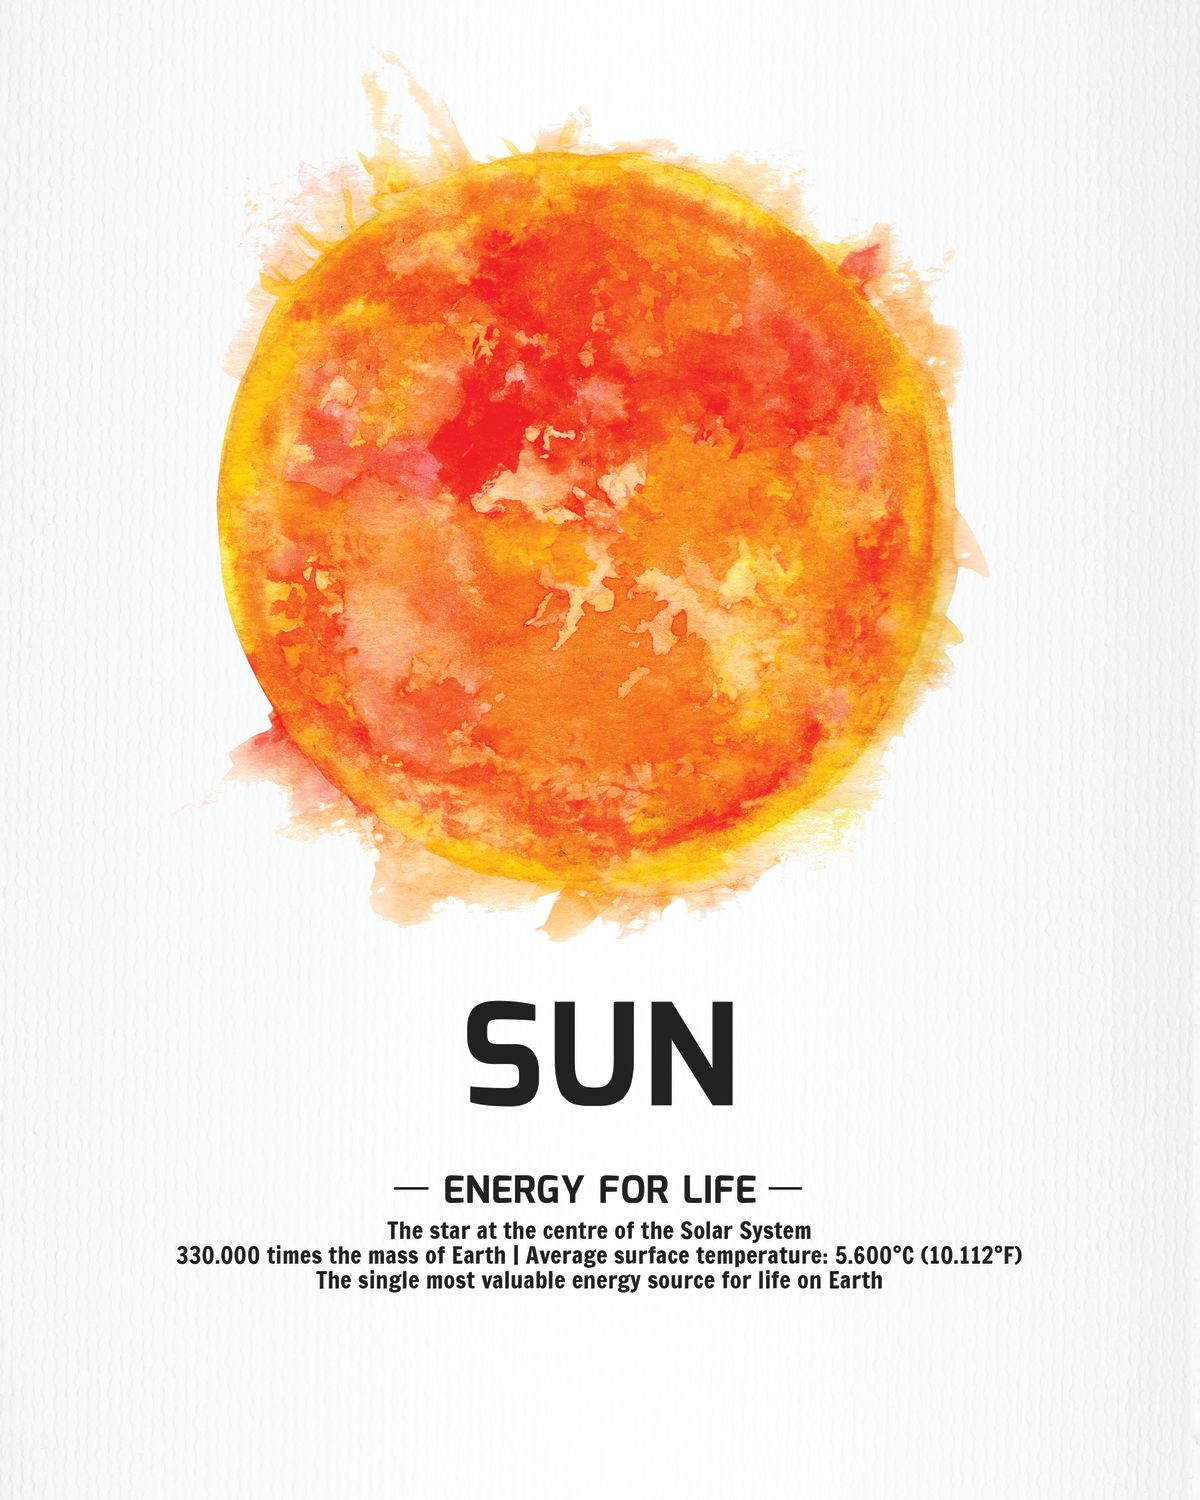 The Sun Description